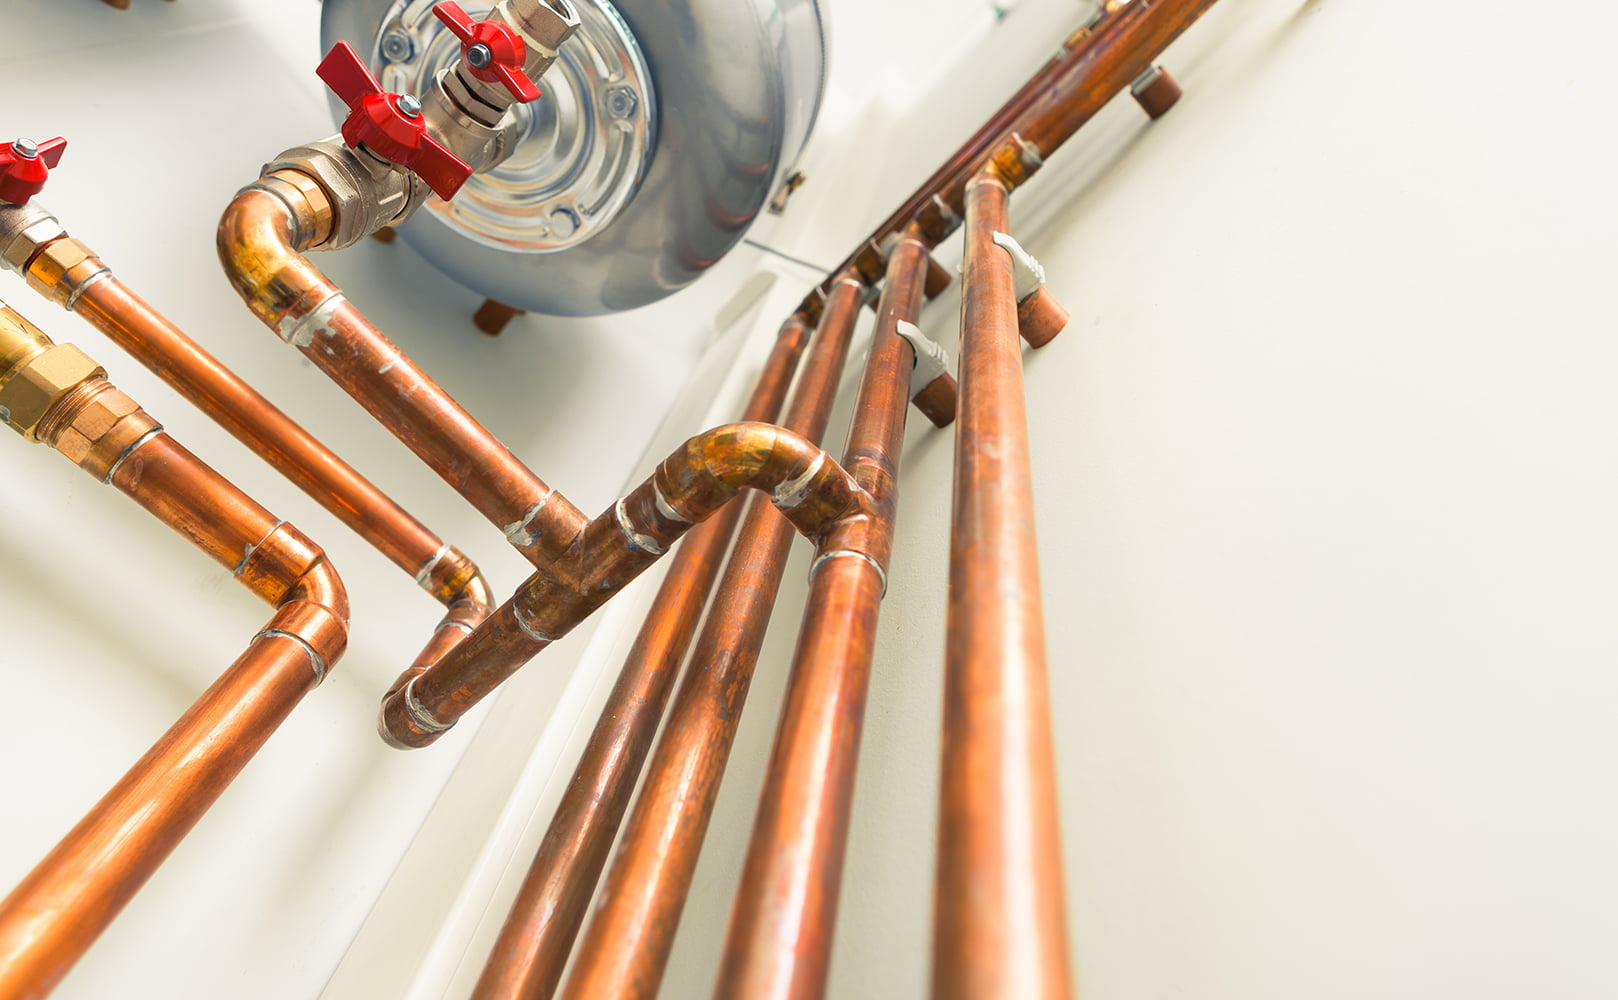 copper piping in boiler room